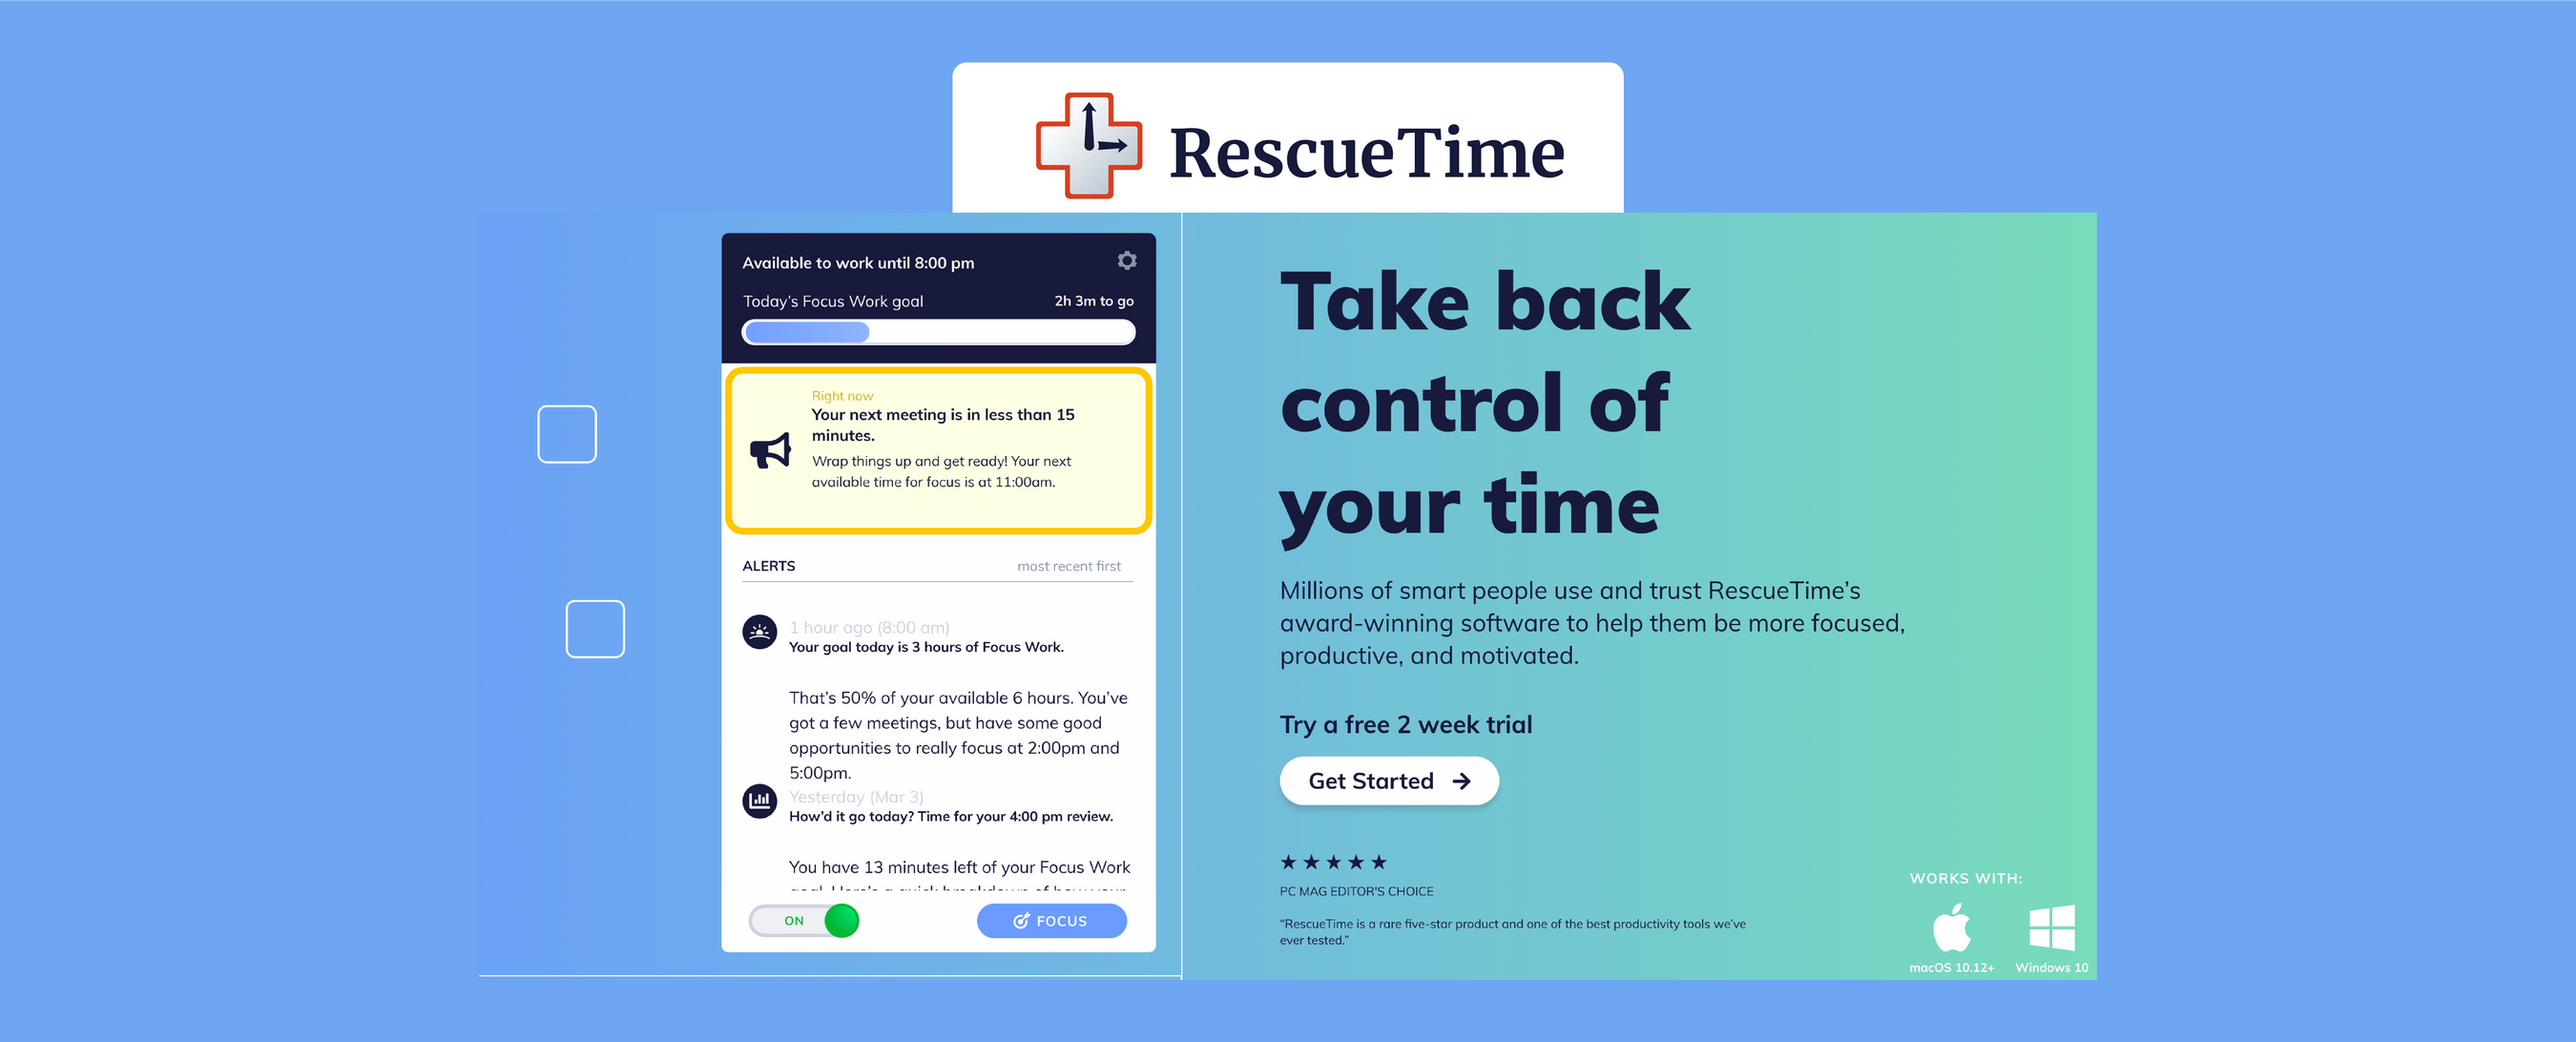 rescuetime open source alternative